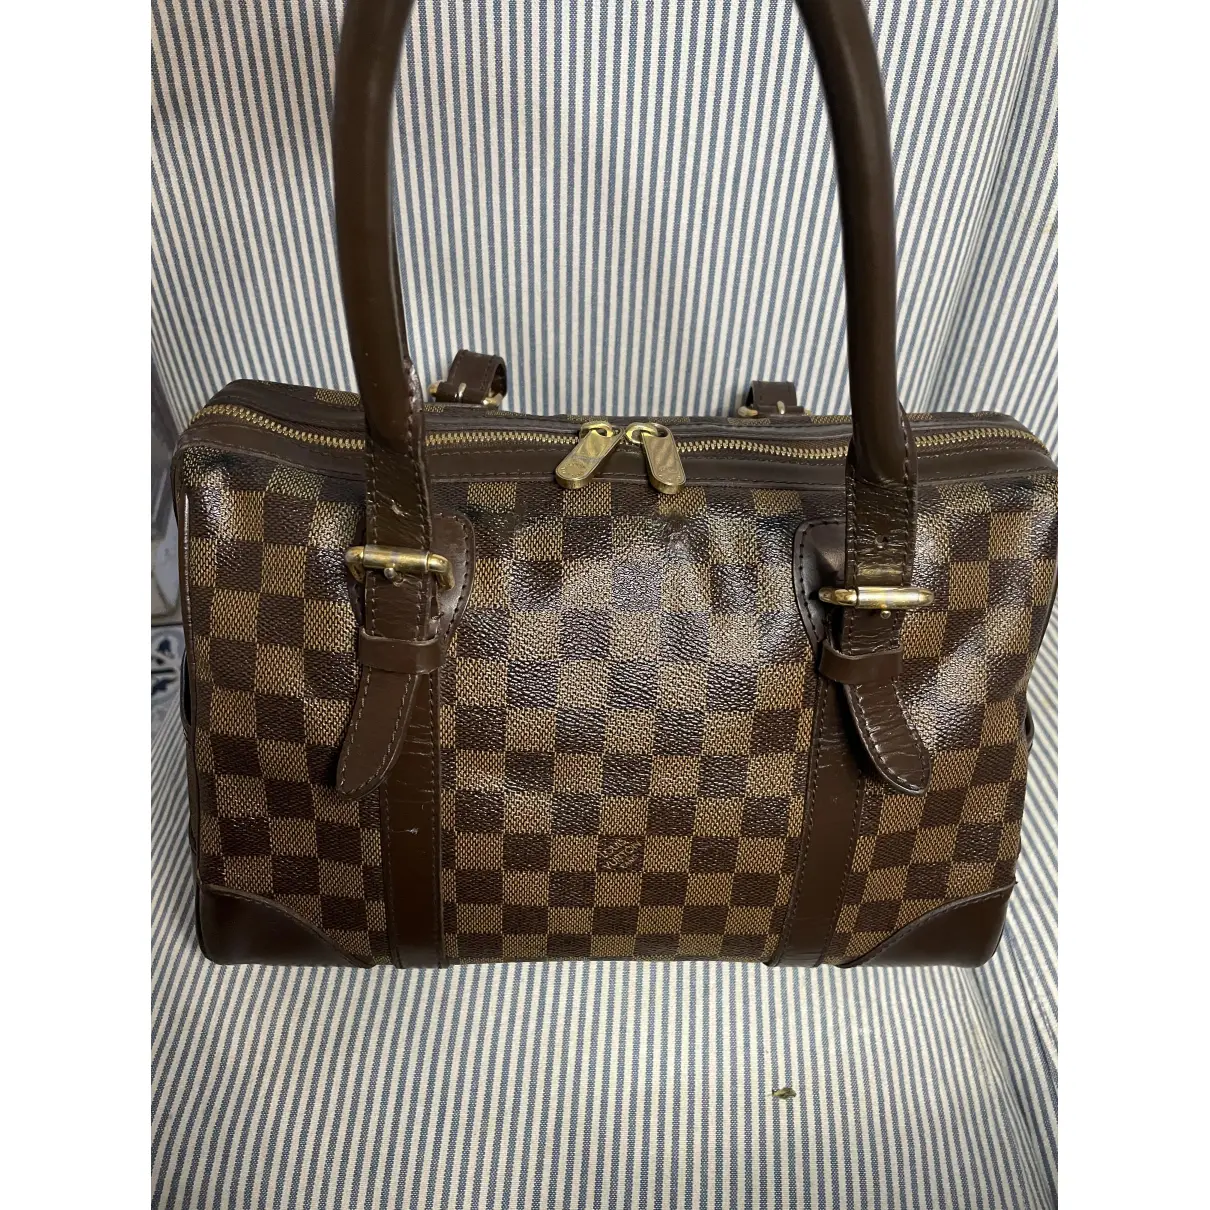 Berkeley cloth handbag Louis Vuitton